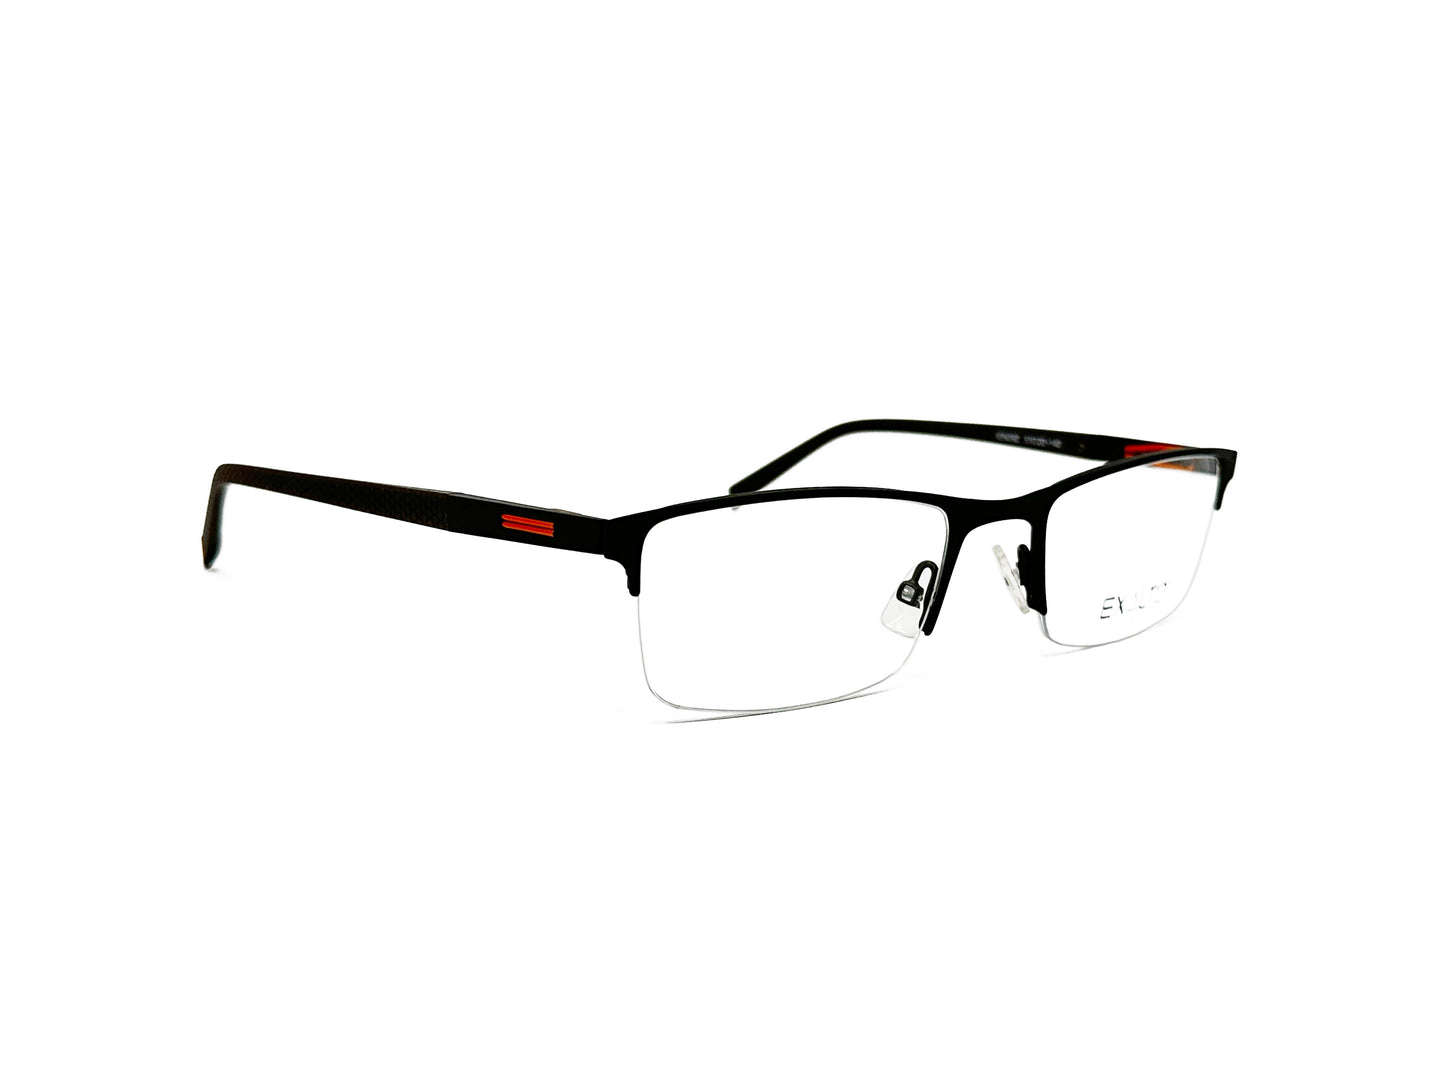 Exalto rectangular, metal, half-rim optical frame. Model: 65N092. Color: Black with red stripe on side. Side view.